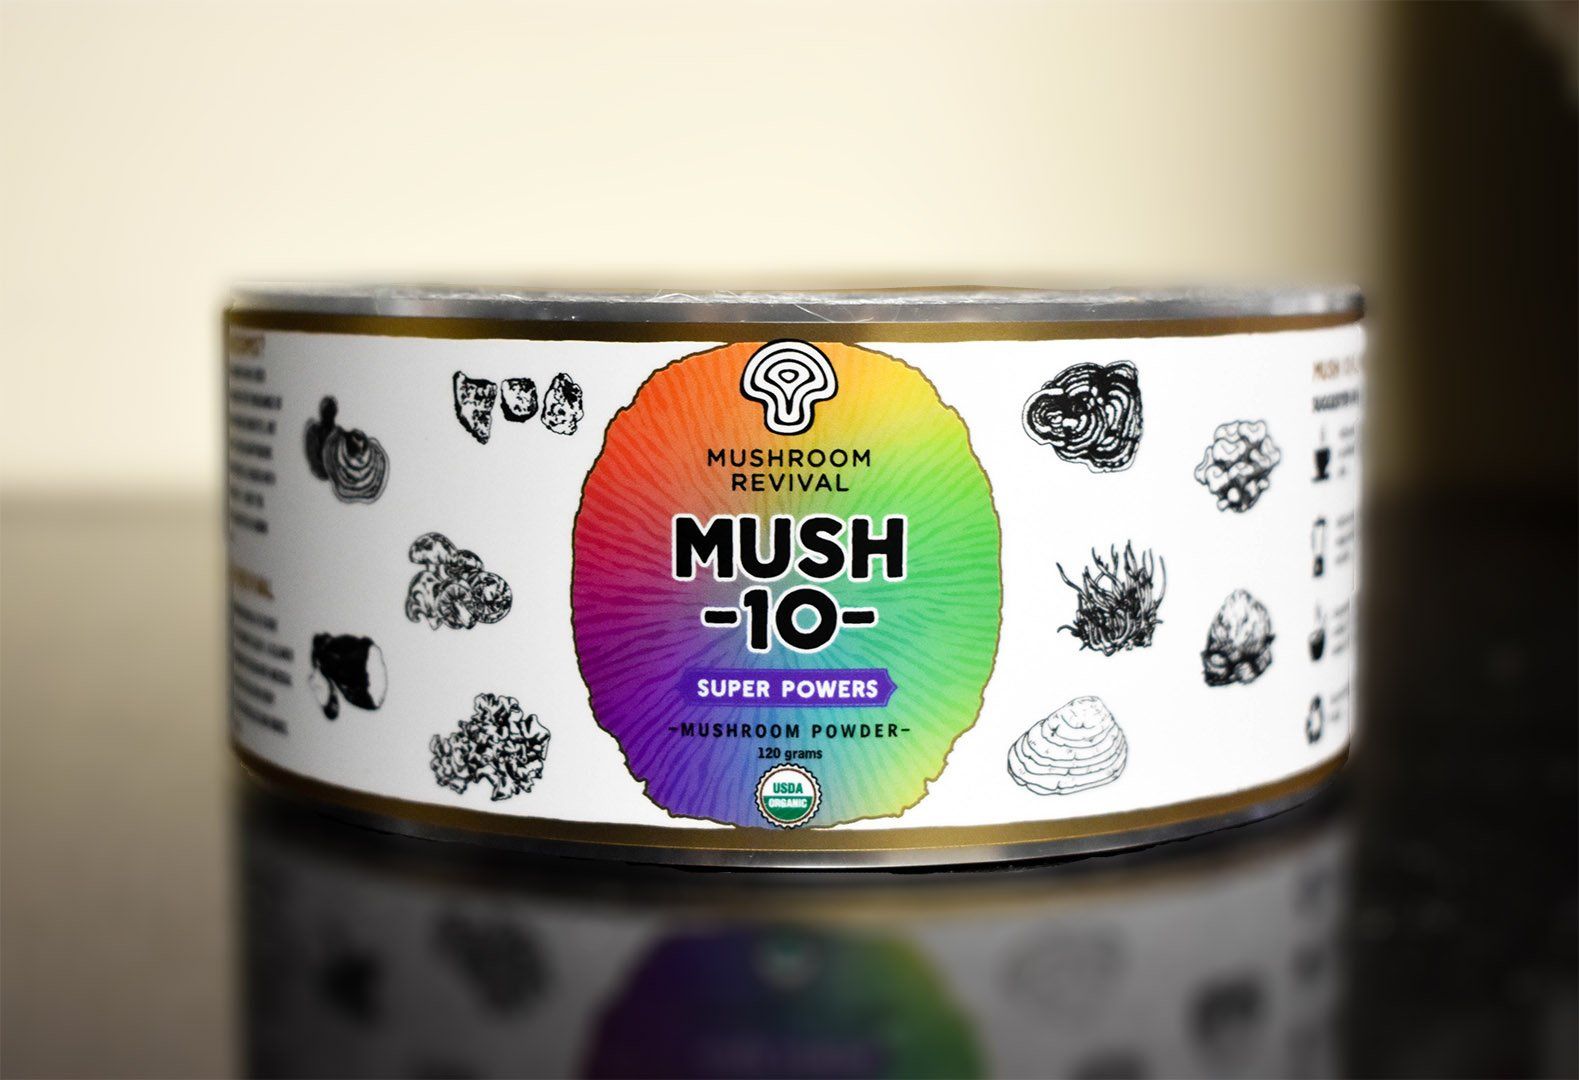 Roll of Mushroom Revival's Mush 10 labels on black background